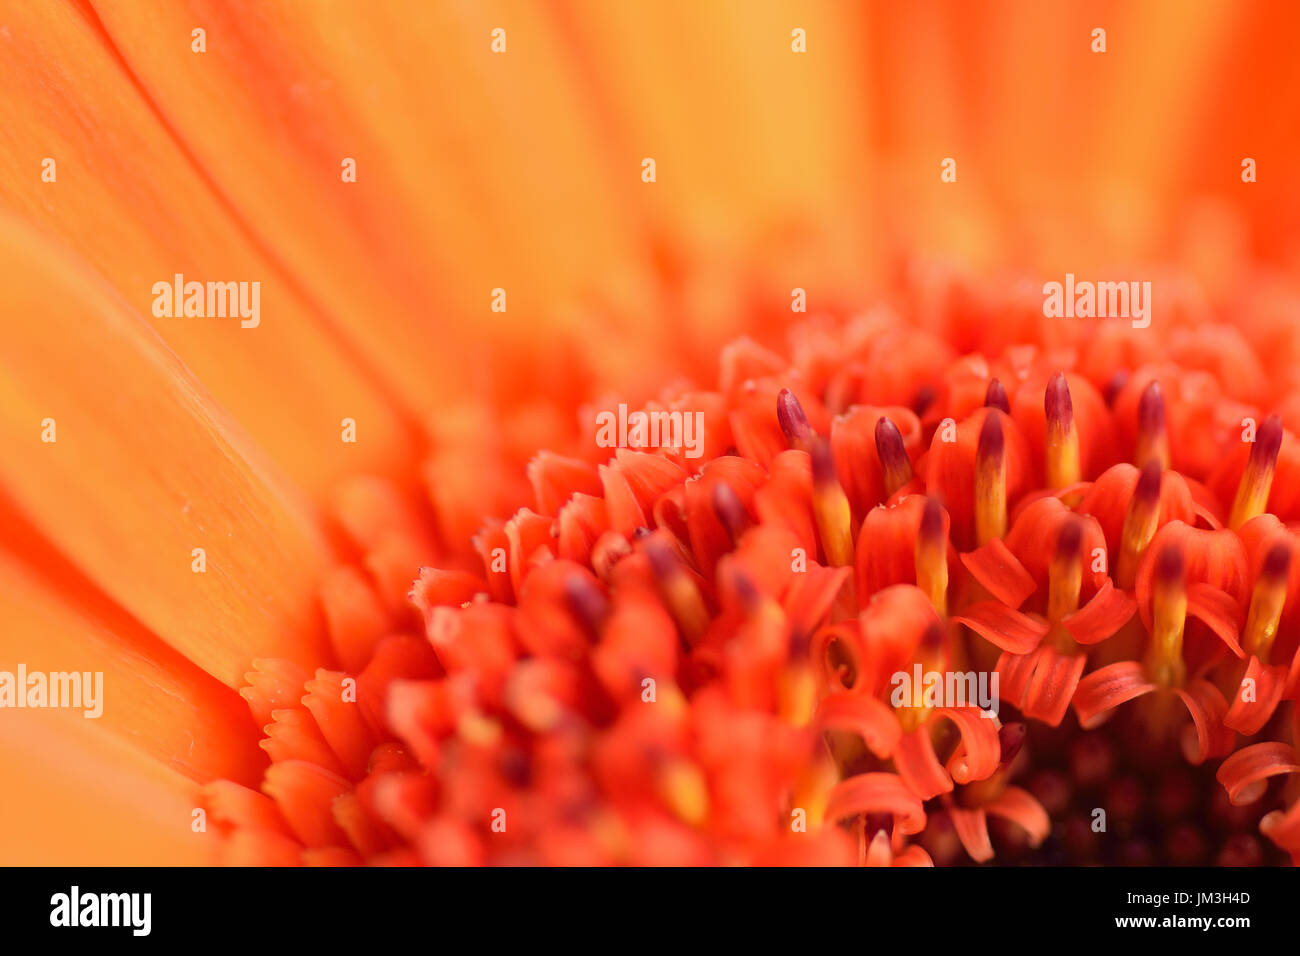 Macro details of orange colored Daisy flower in horizontal frame Stock Photo